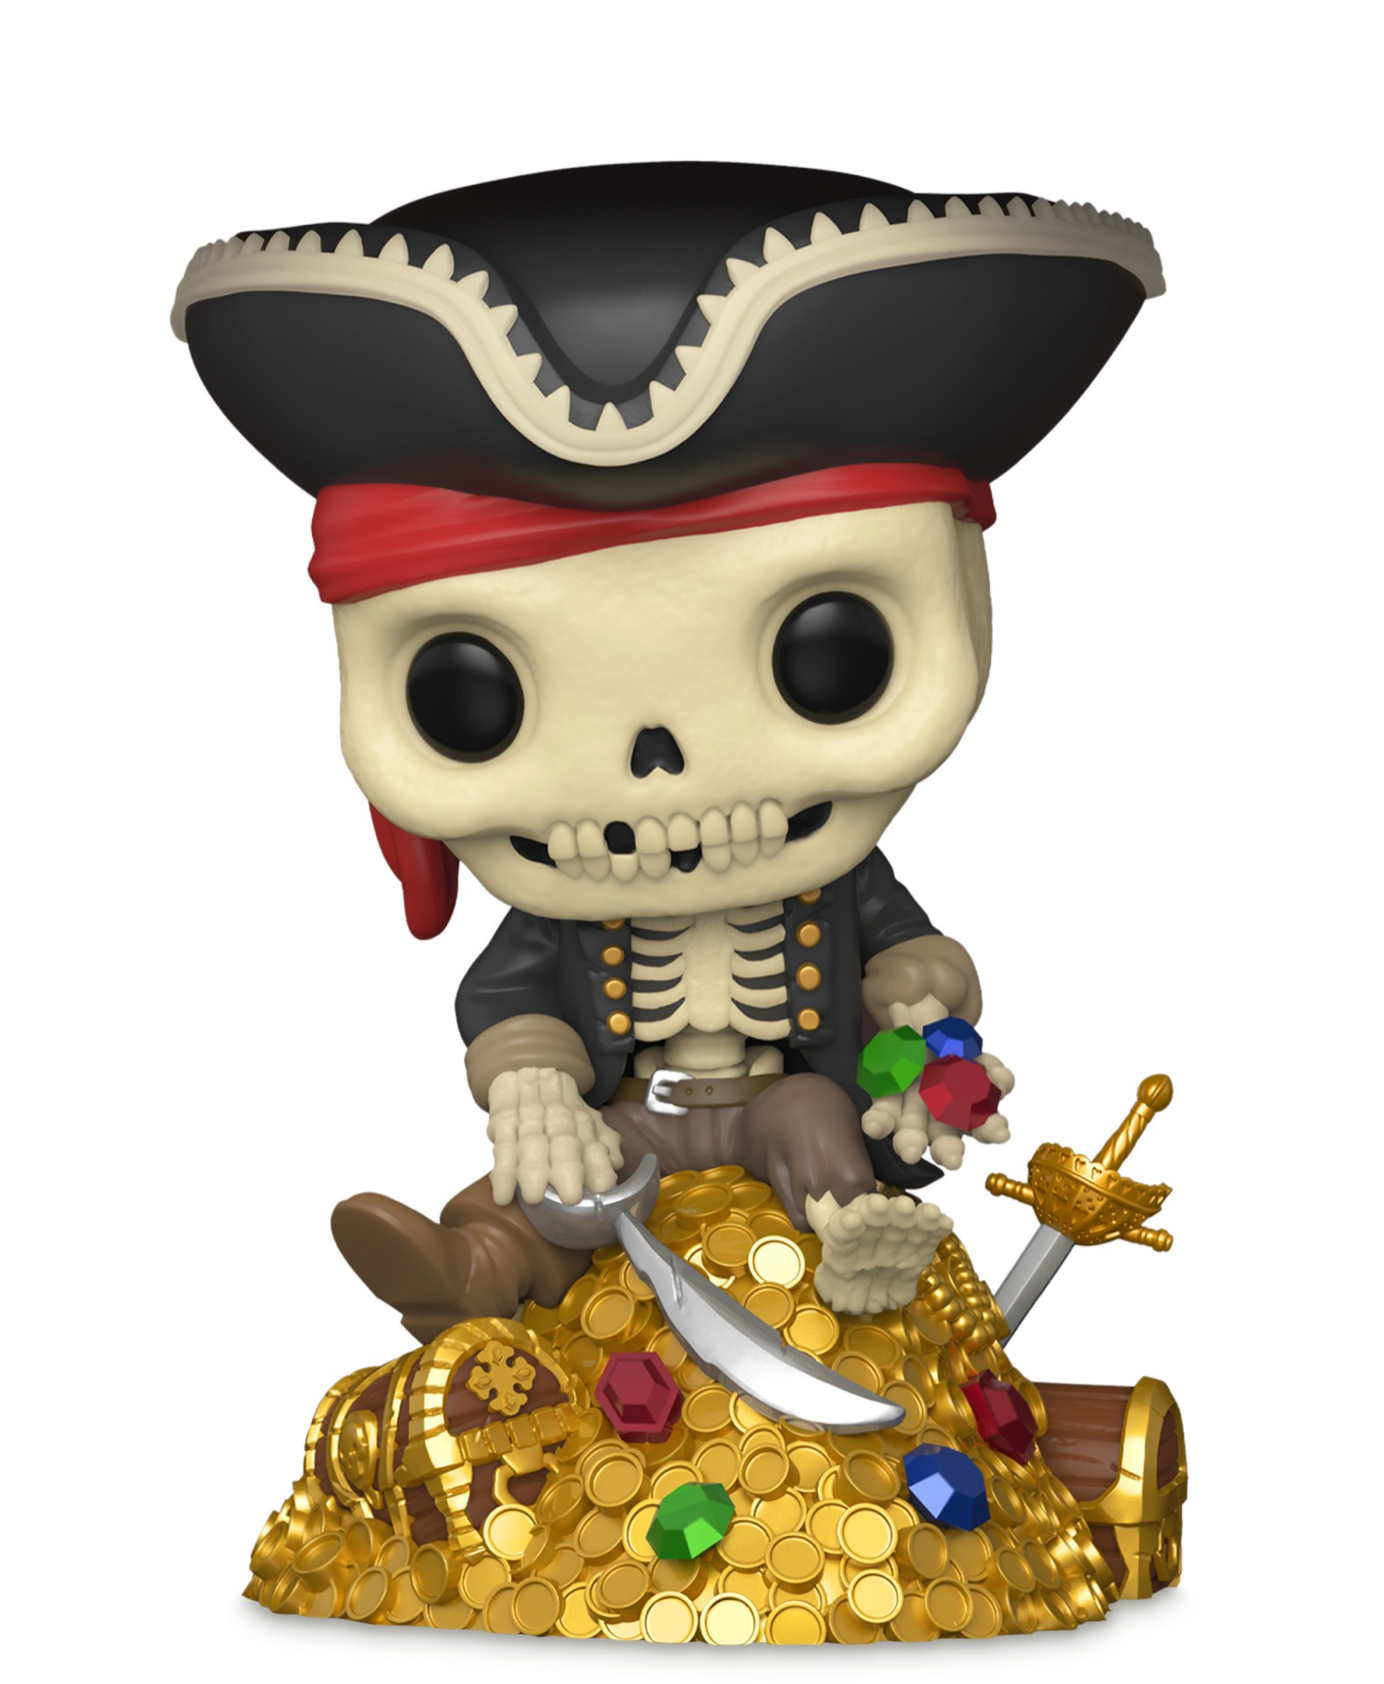 Disney Parks Treasure Skeleton Funko Pop Vinyl Pirates of the Caribbean New